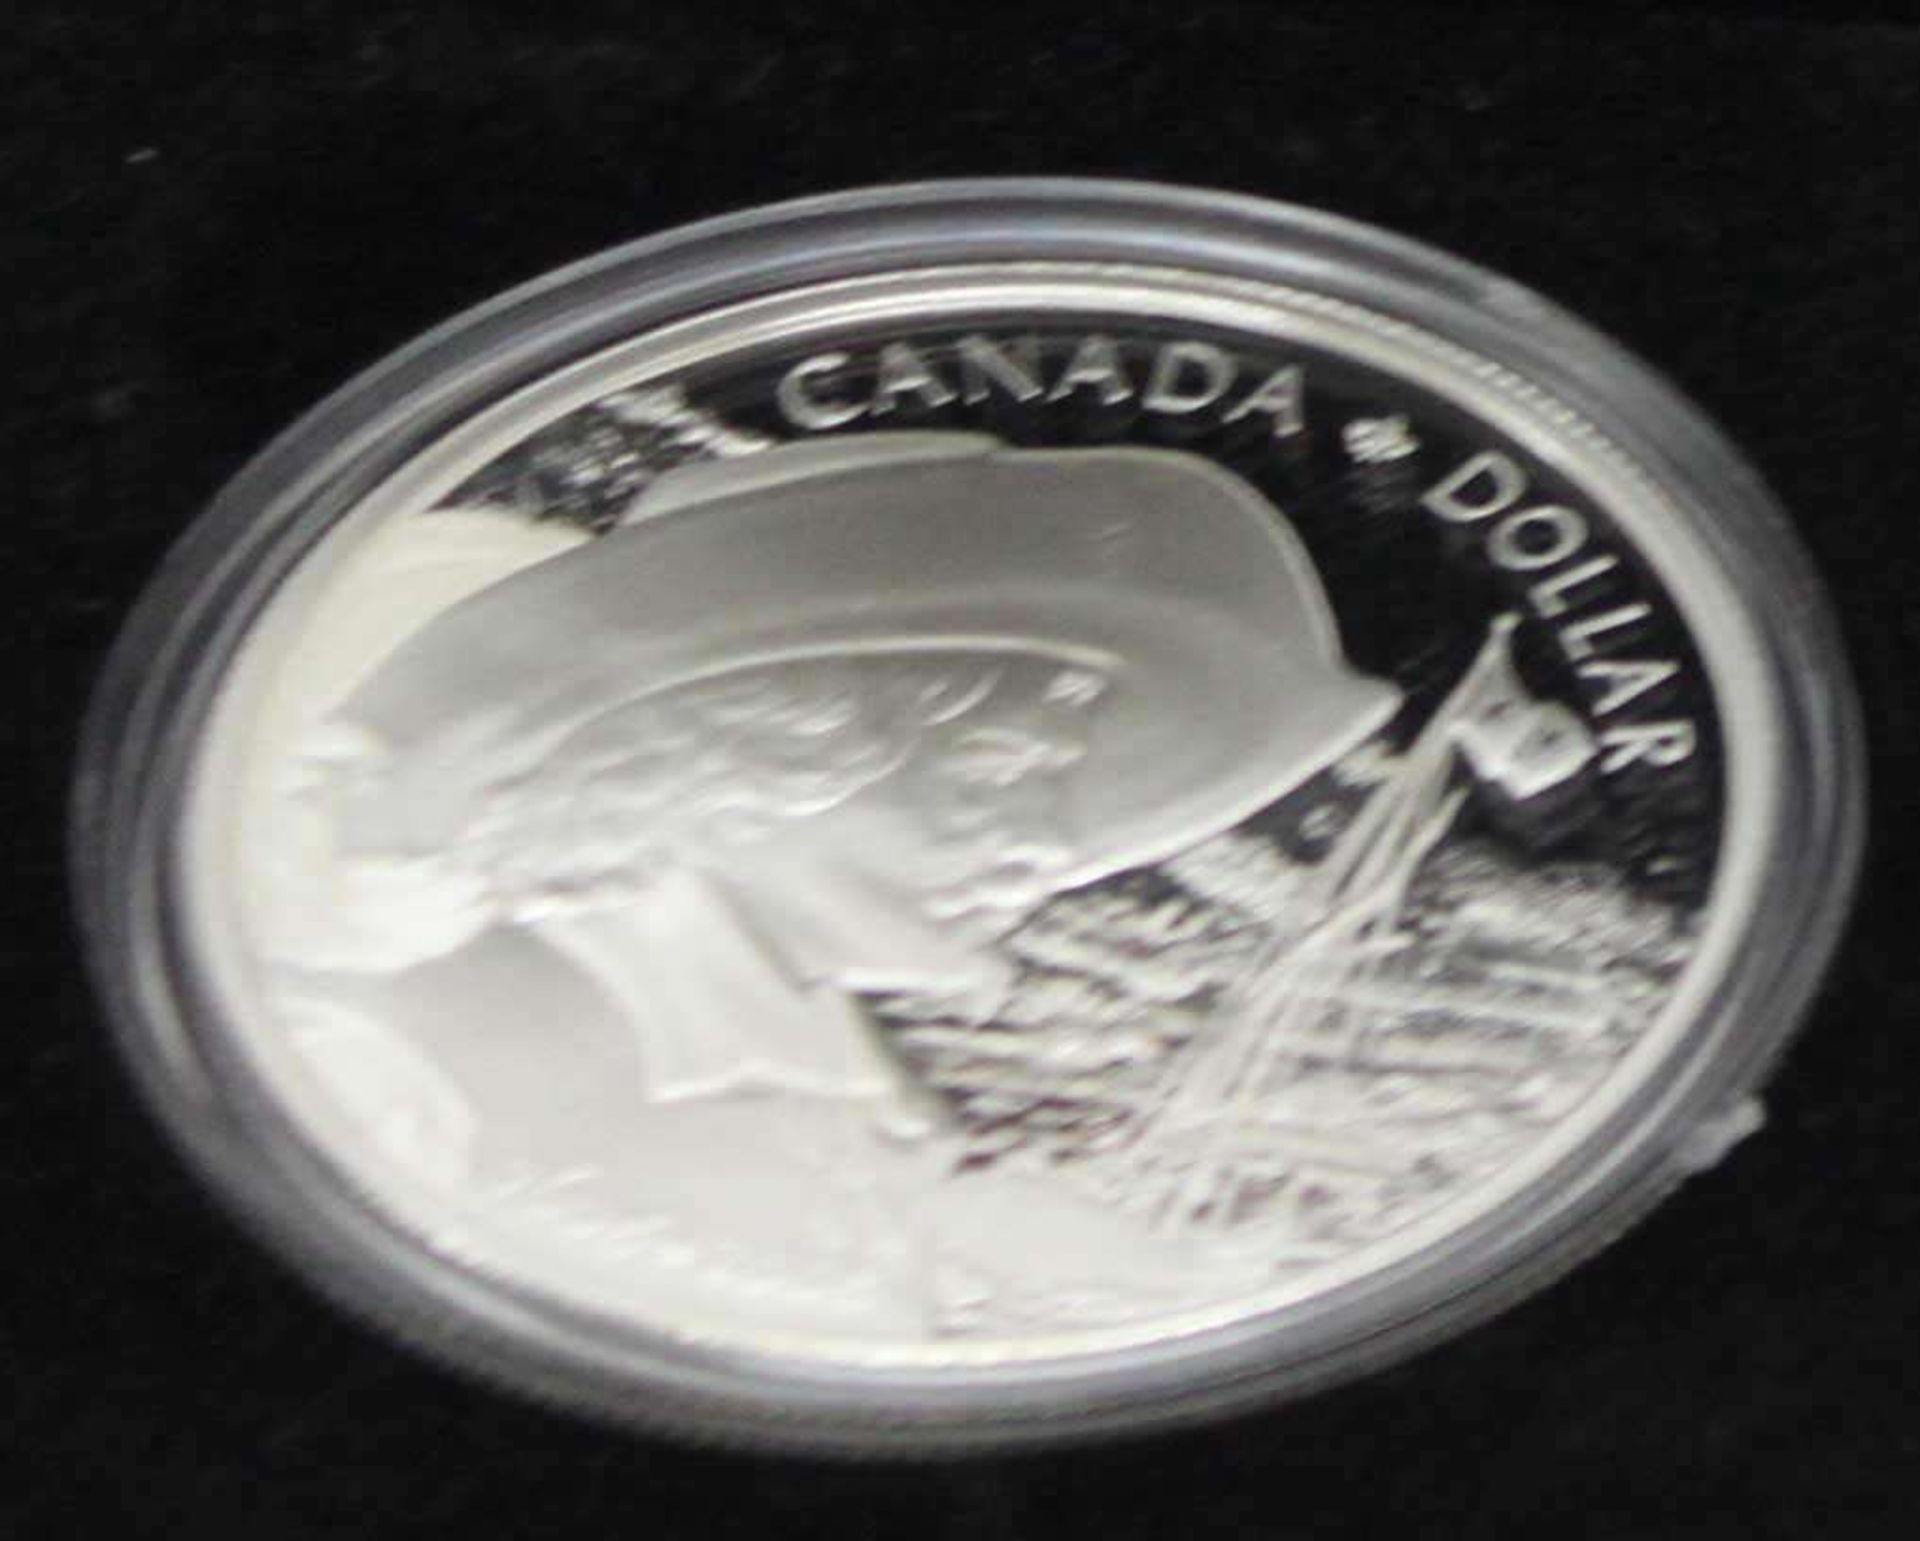 Canada Dollar von 2008 Quebec City Samuel de Champlain , Proof Silver Dollar im Etui Canada Dollar